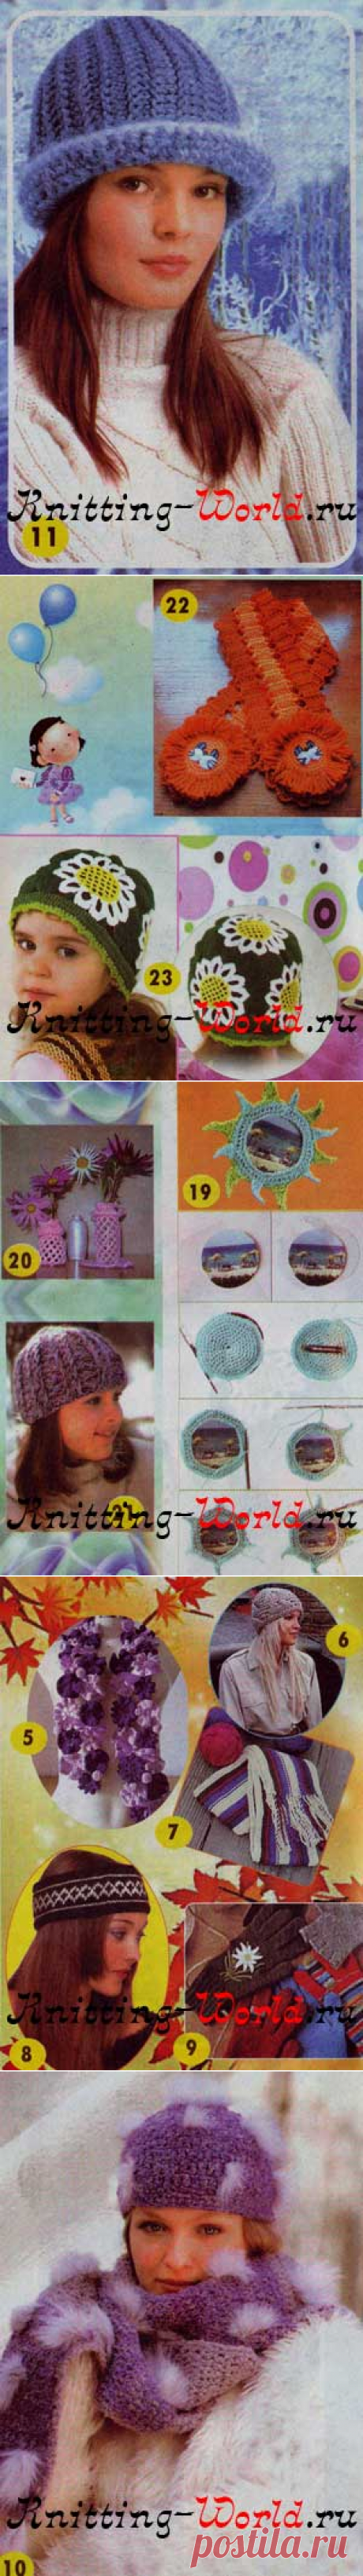 Журнал Вязание. Шапки, шарфы, варежки №2 2012 года - Мир вязания - www.Knitting-World.ru